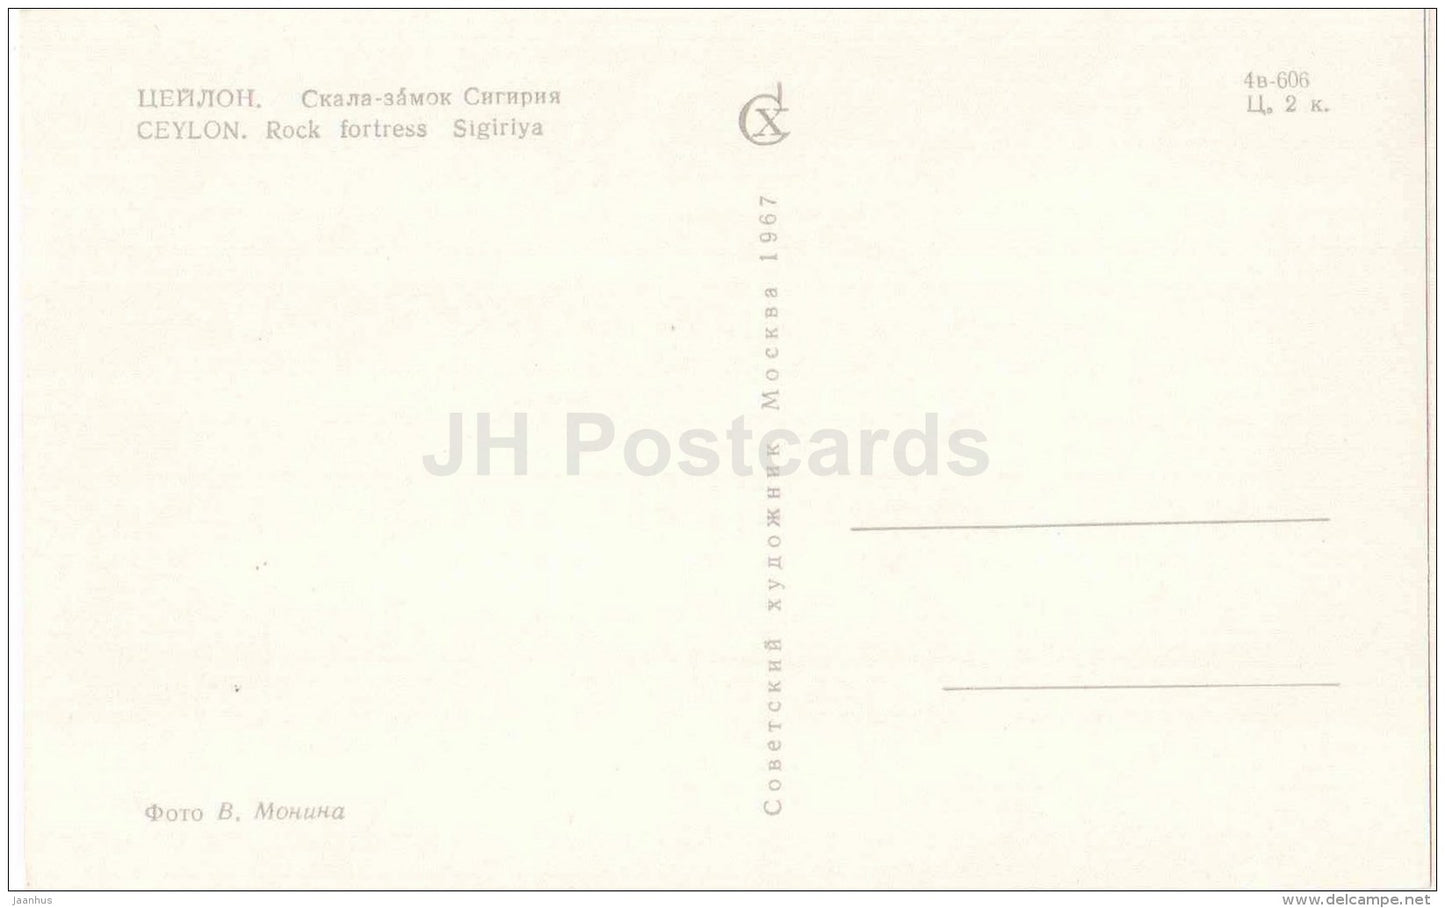 Rock fortress Sigiriya - 1967 - Sri Lanka - Ceylon - unused - JH Postcards